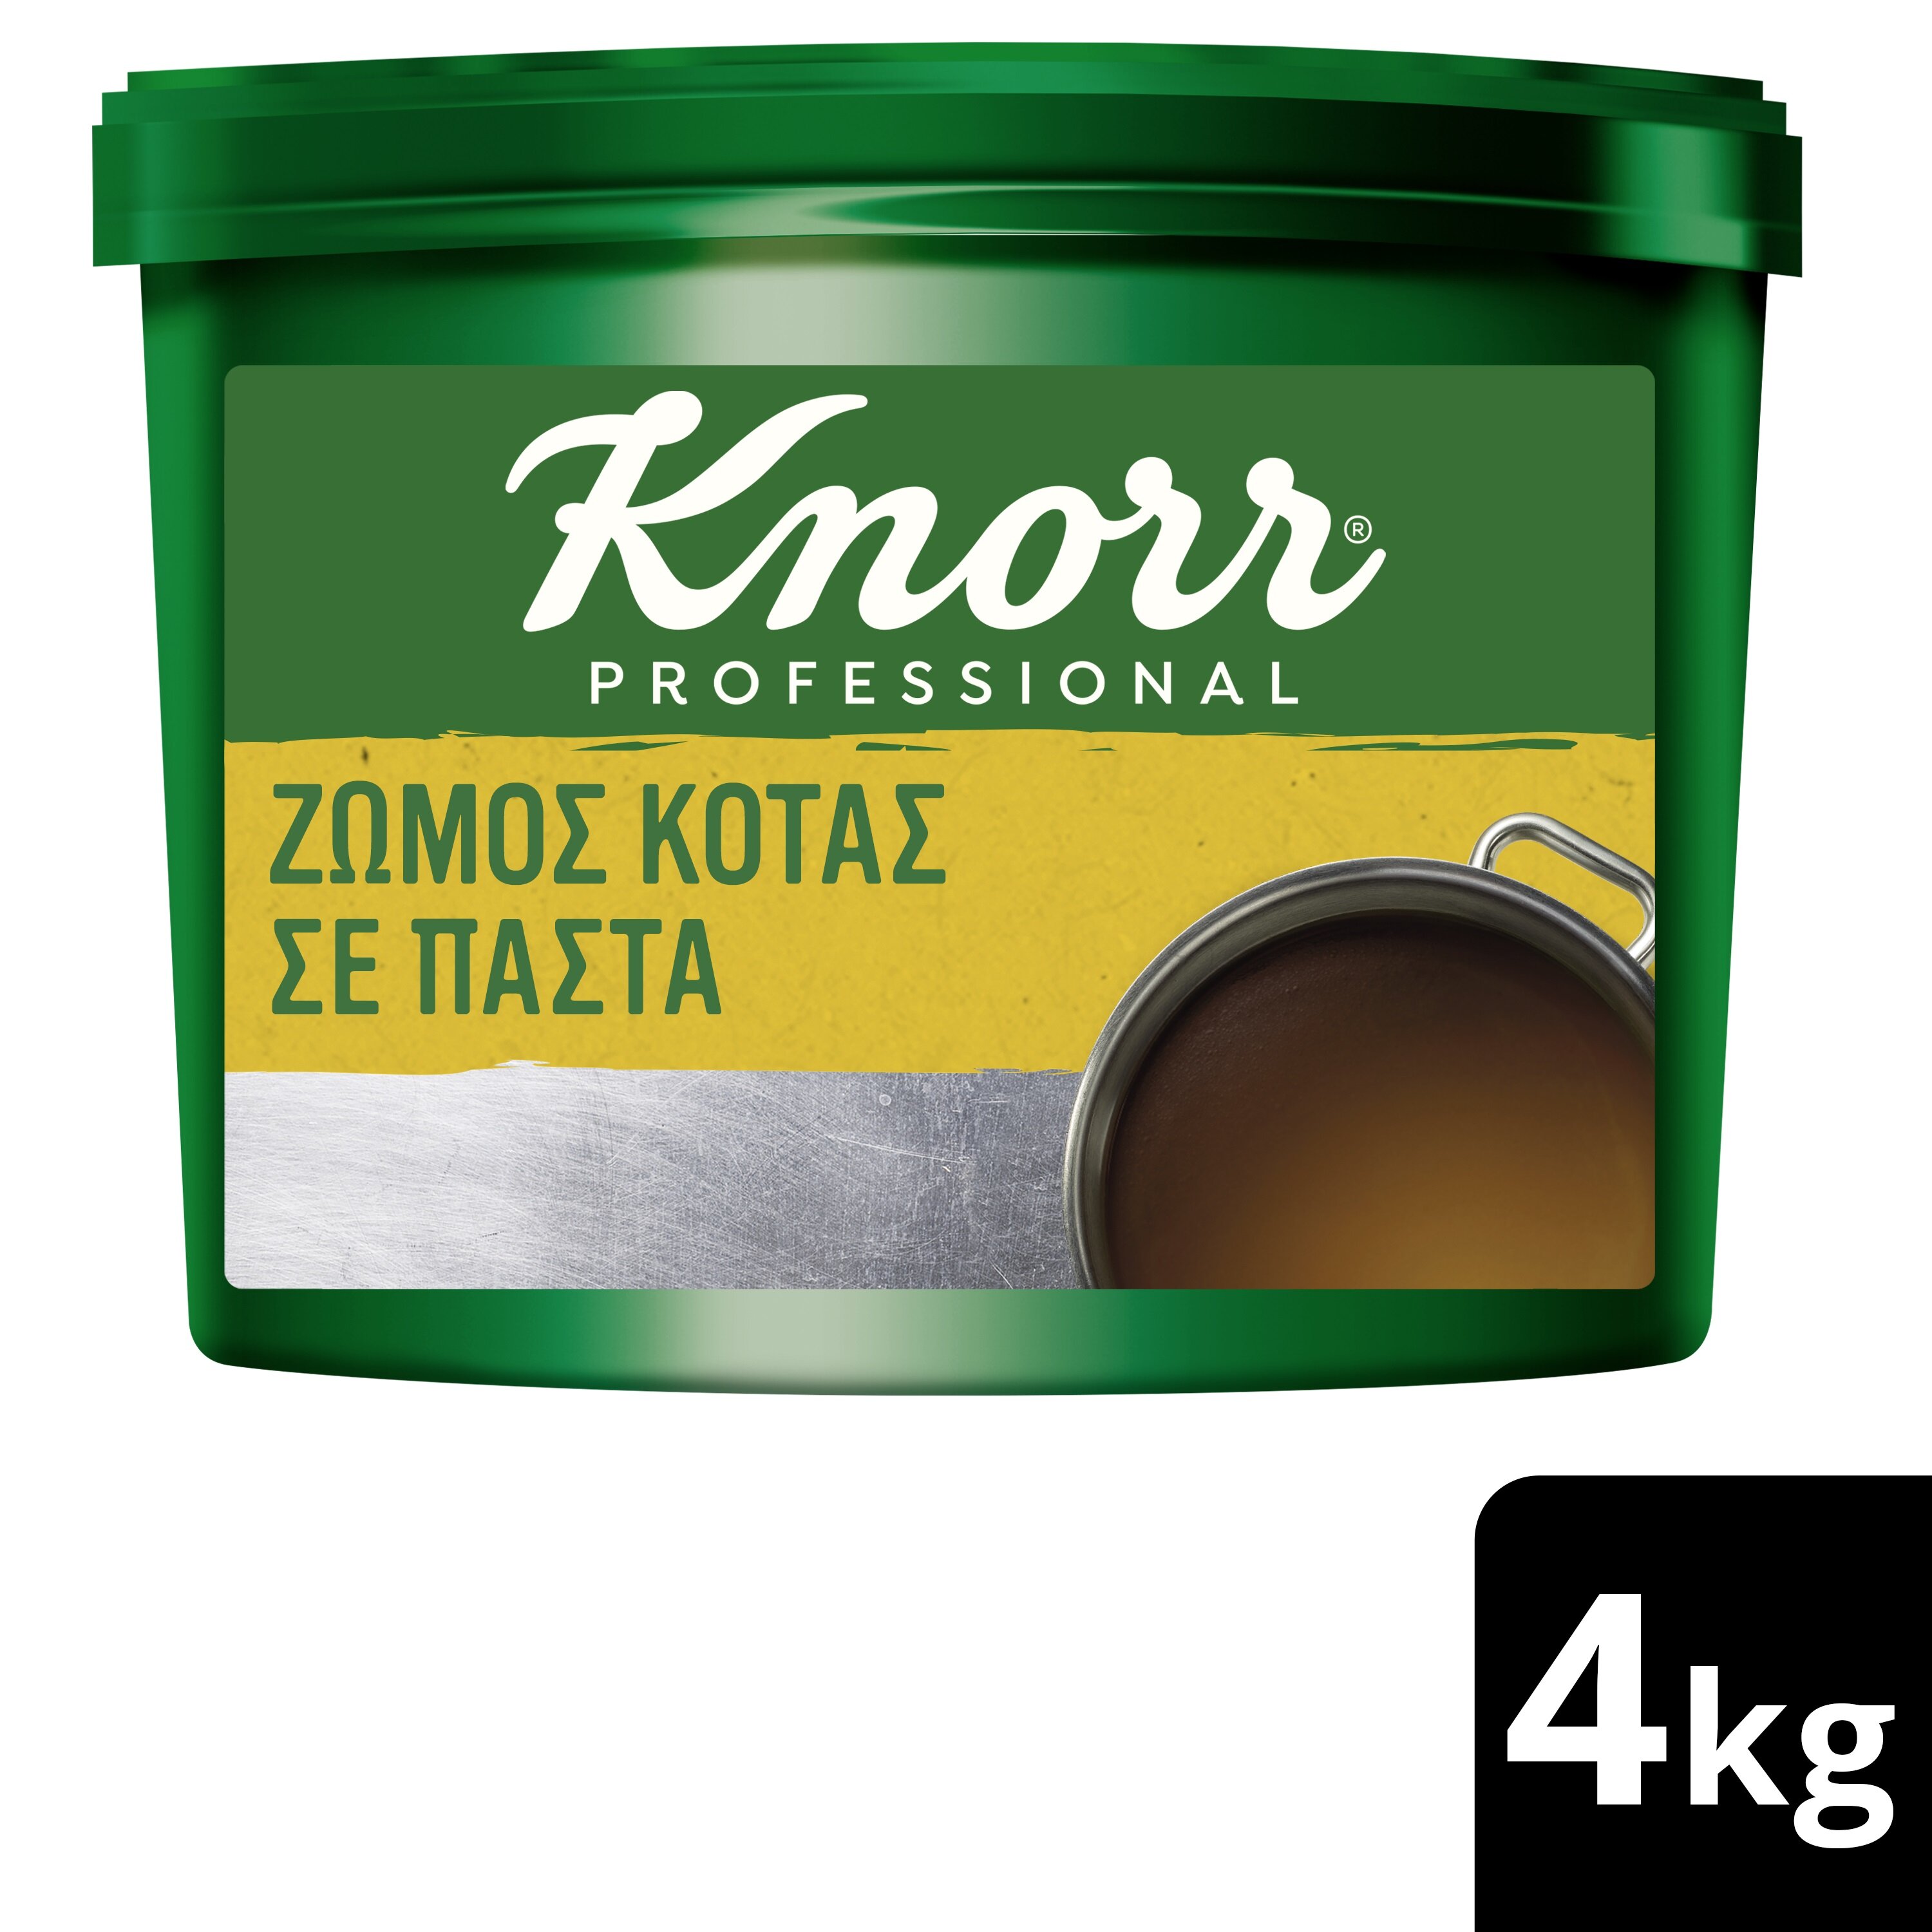 Knorr Ζωμός Κότας σε Πάστα 4 kg